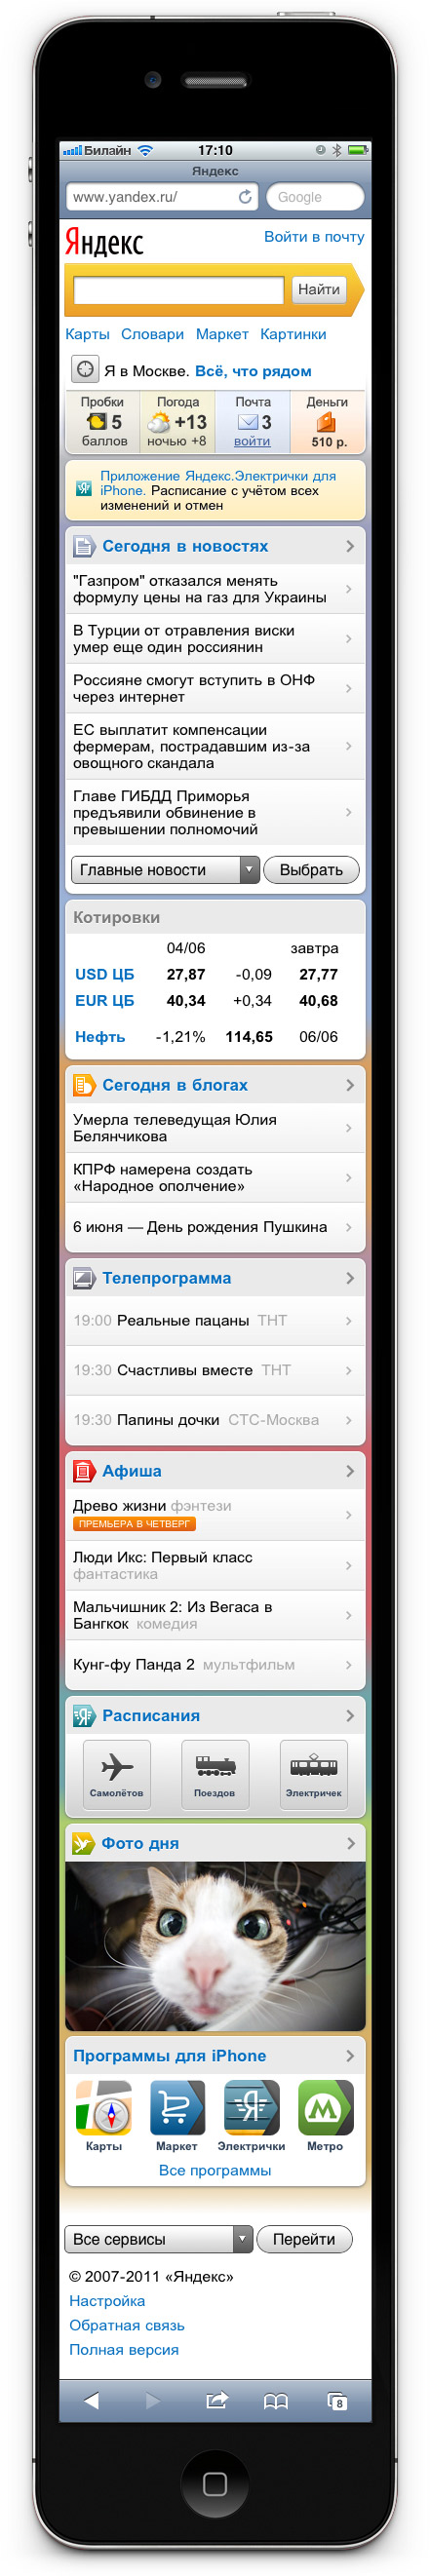 yandex mobile iphone